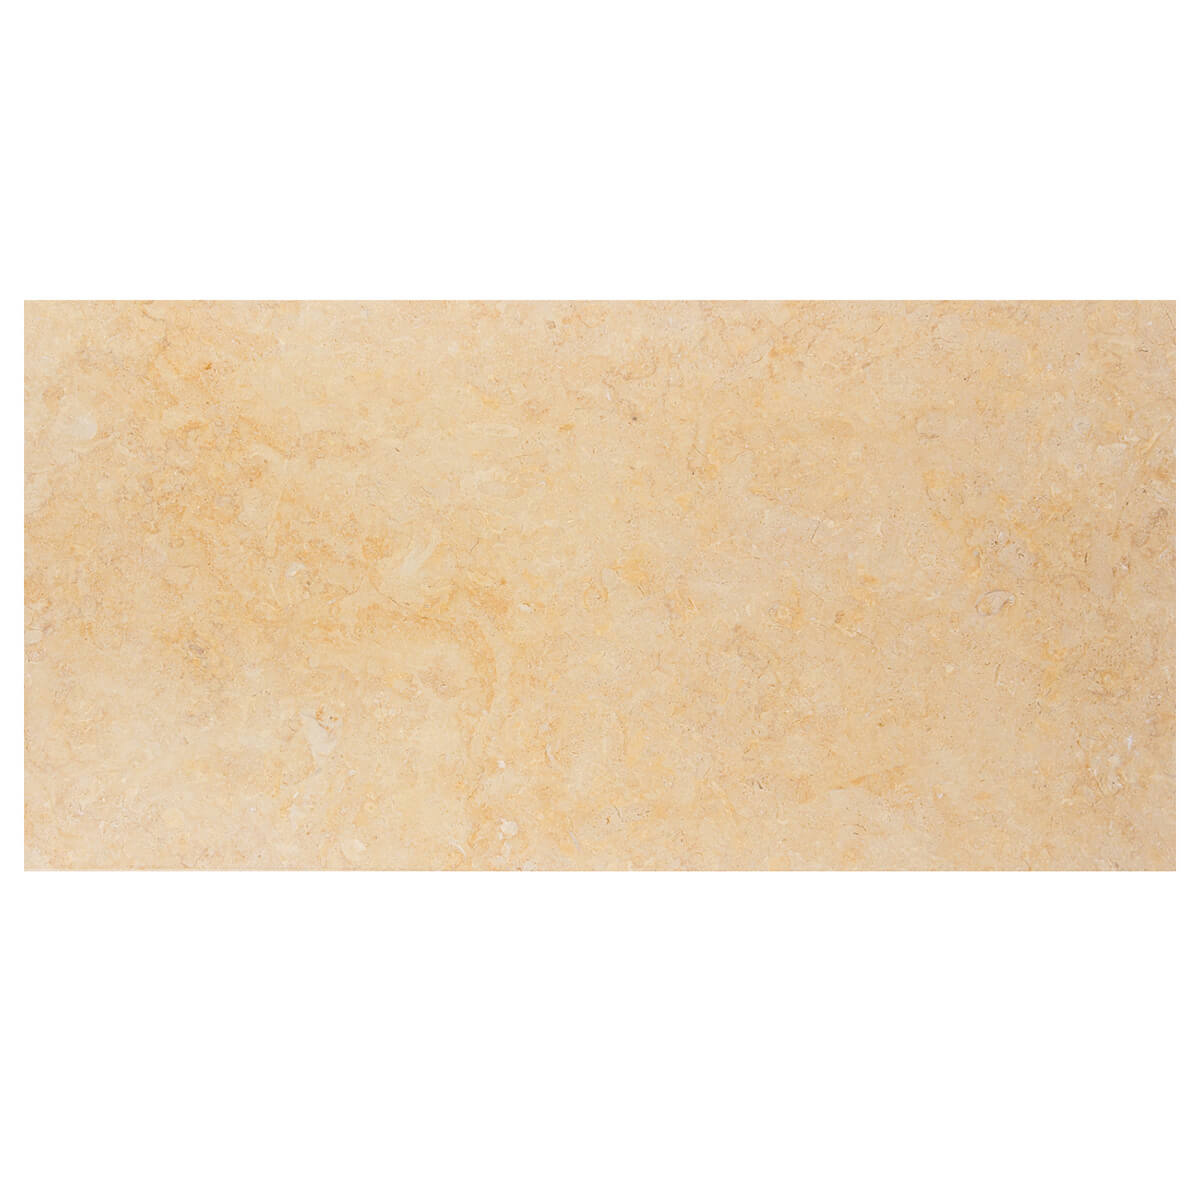 haussmann jerusalem gold limestone rectangle natural stone field tile 12x24 honed